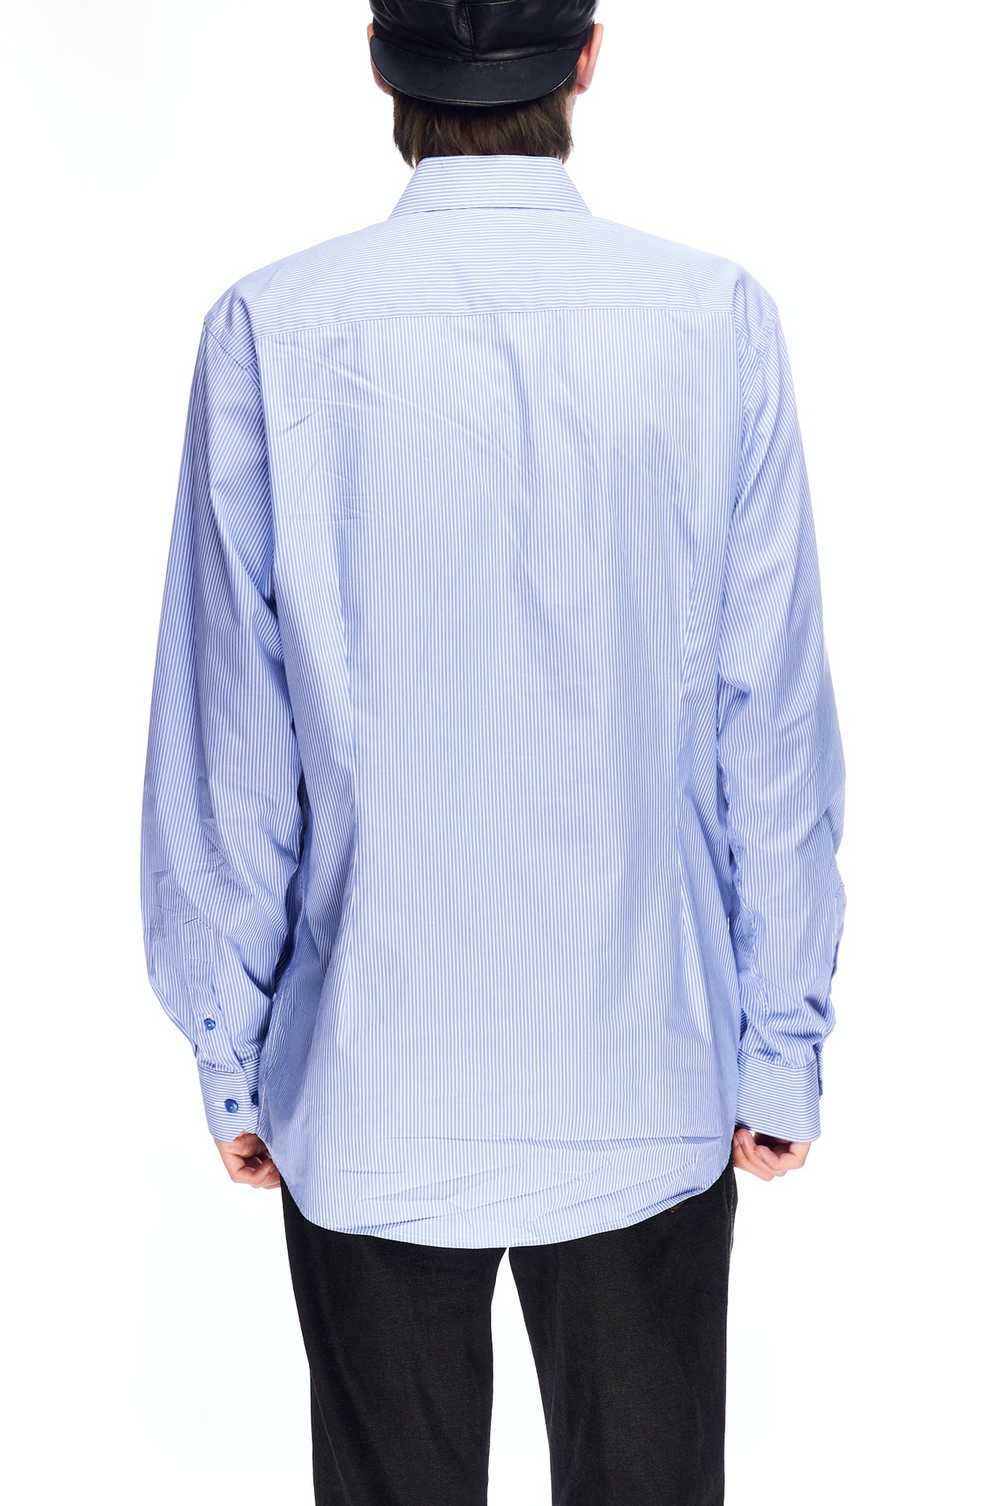 Eton Eton Striped Shirt Size 44/17 - image 4